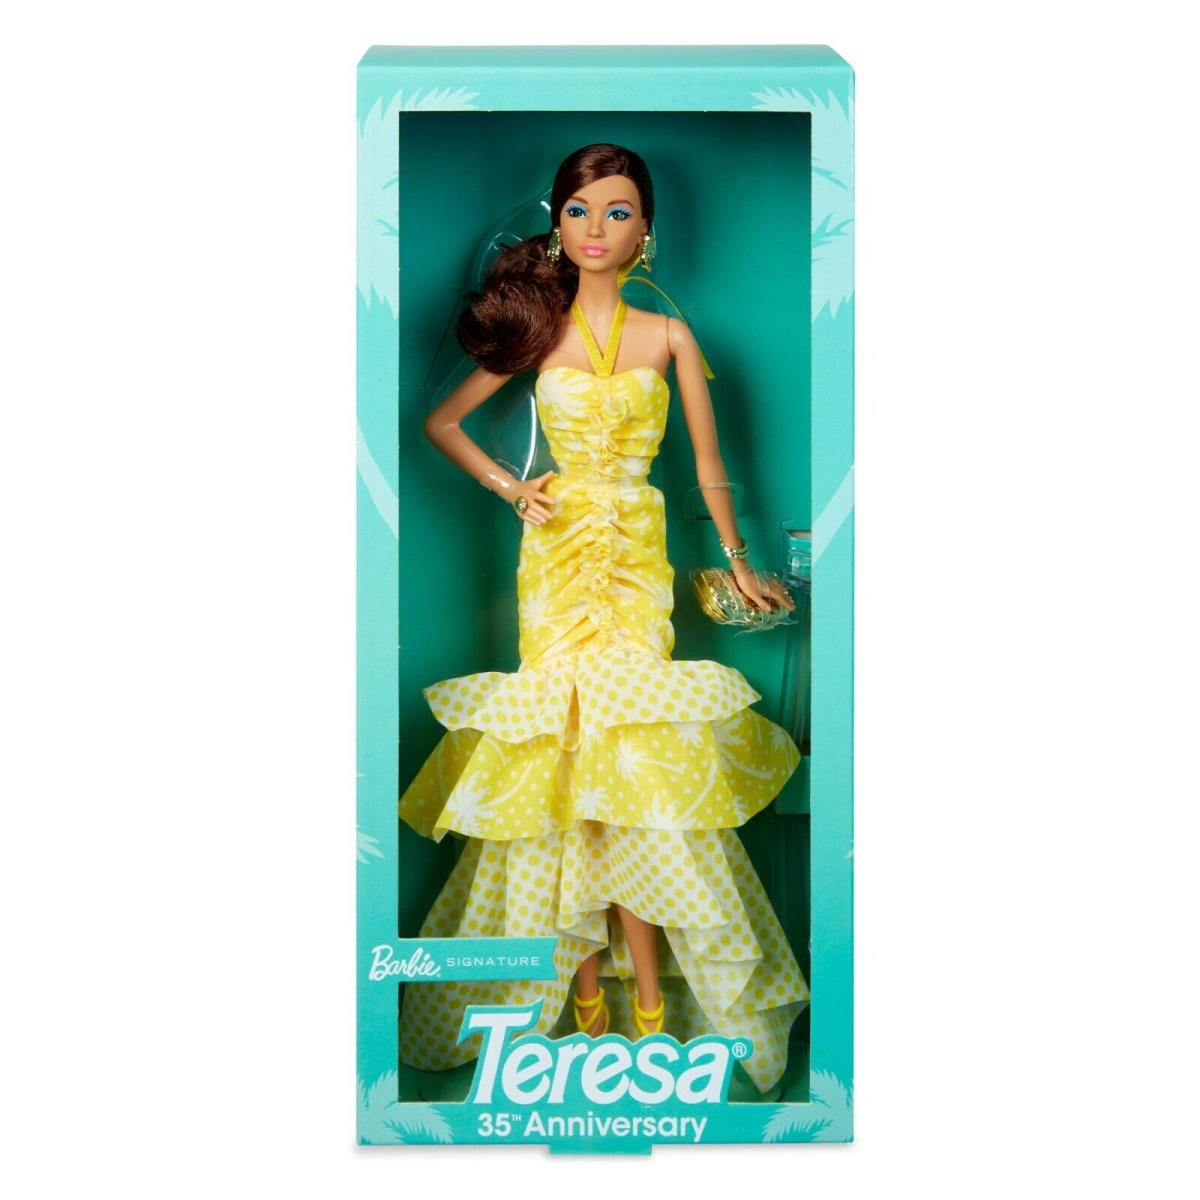 Barbie Signature Barbie 35th Anniversary Teresa Doll - 2023